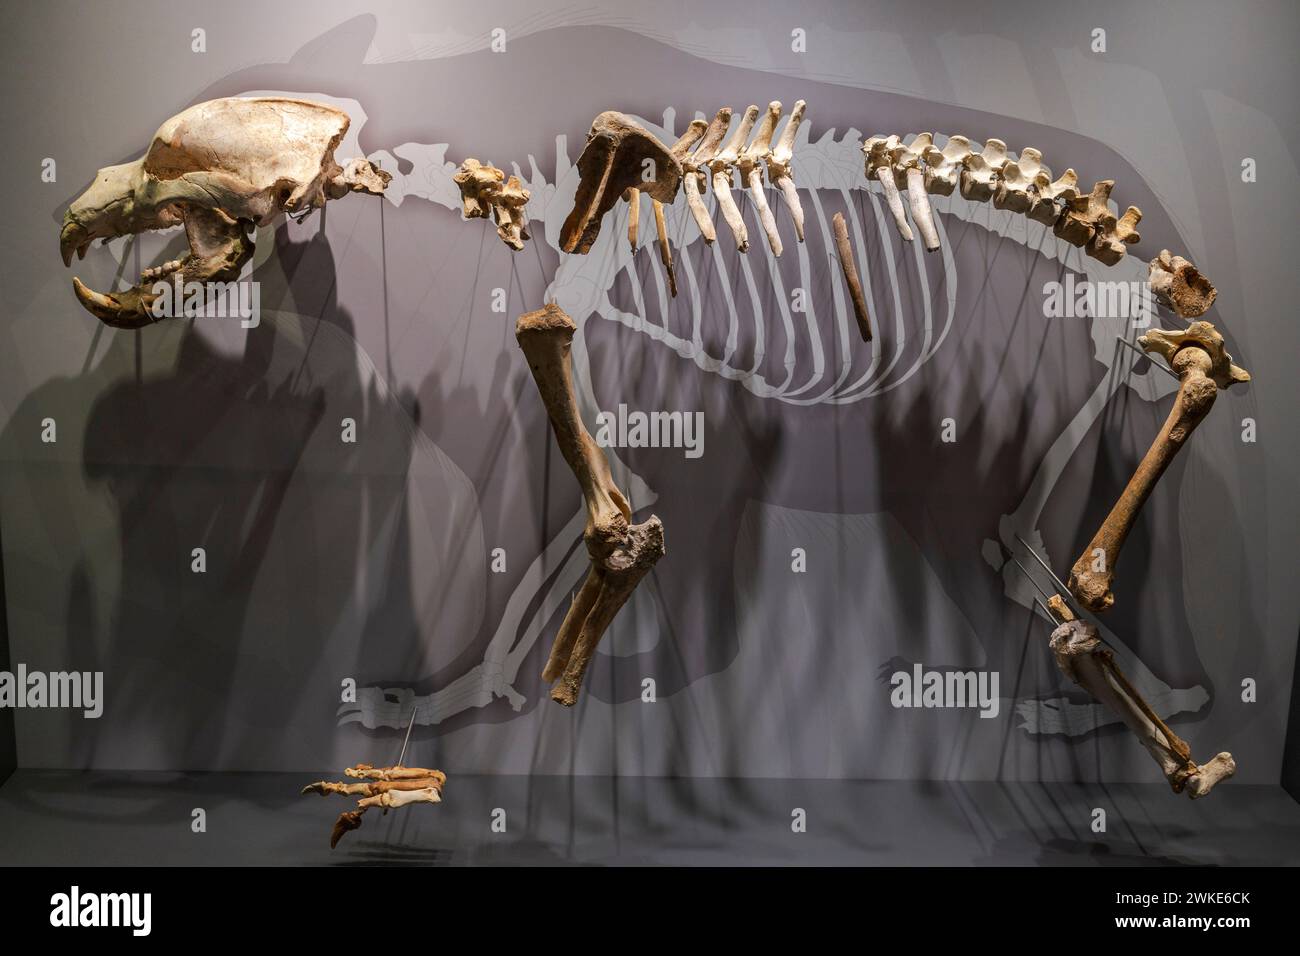 cave bear (Ursus spelaeus), Late Pleistocene, Museum of prehistory and archeology (MUPAC), Santander, Cantabria, Spain. Stock Photo